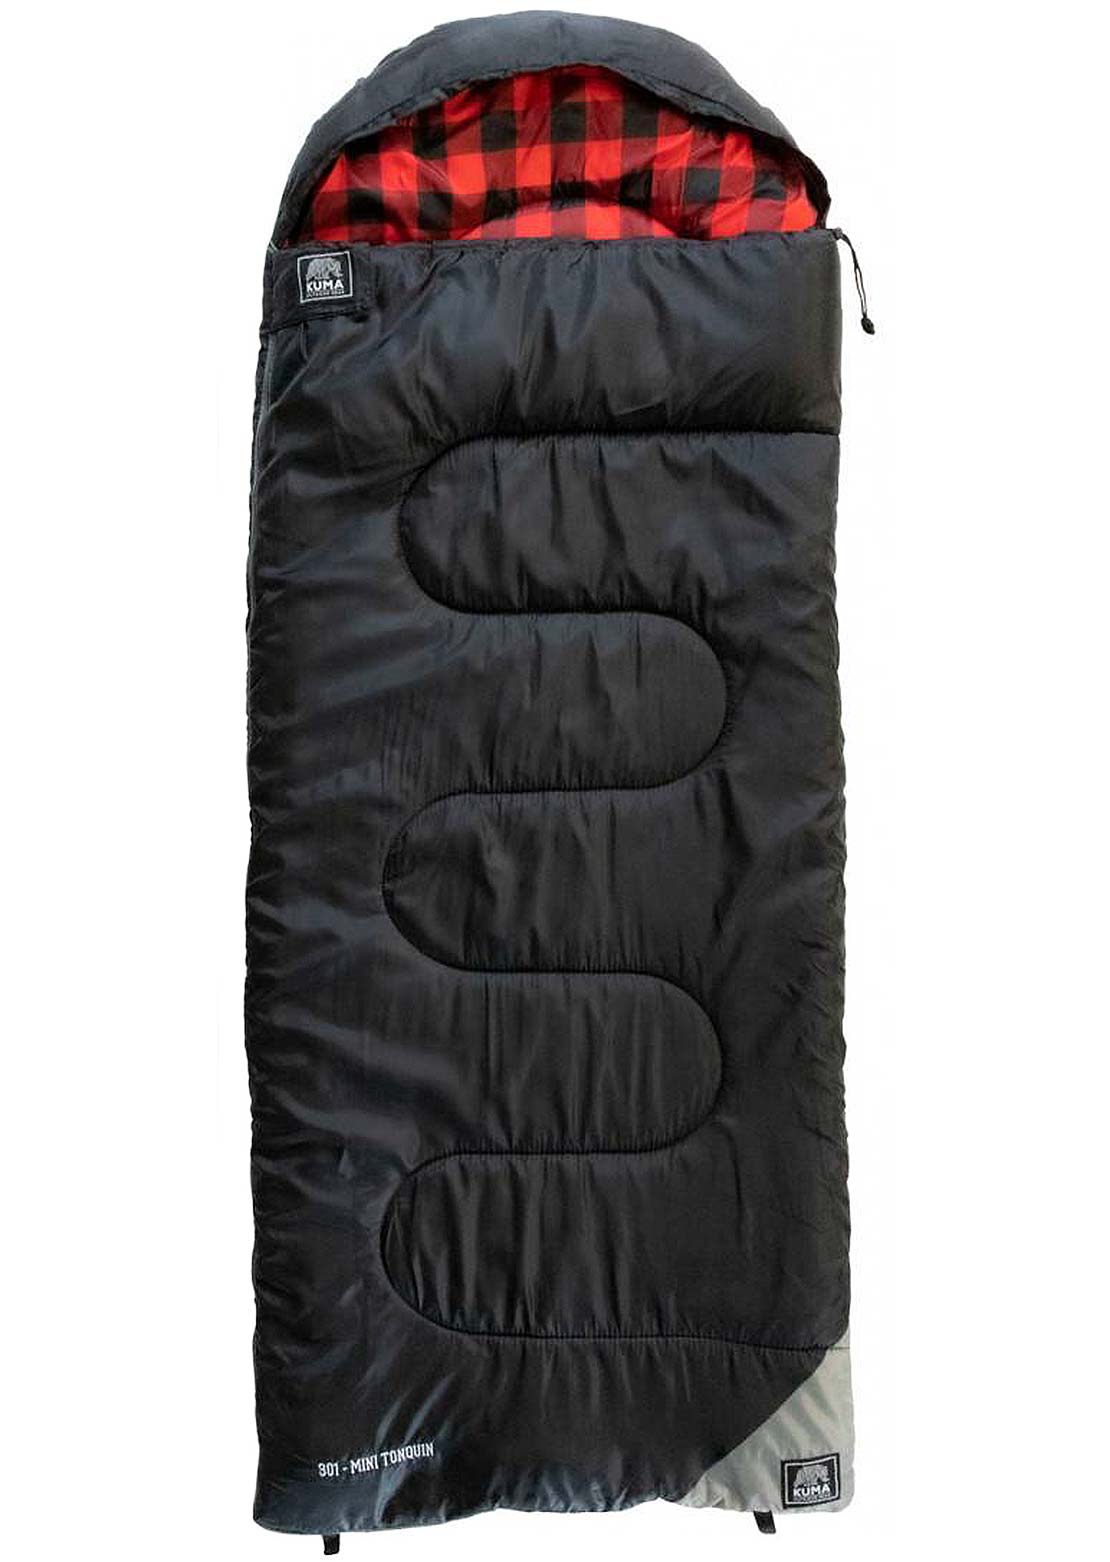 Kuma Outdoor Gear Mini Tonquin Sleeping Bag